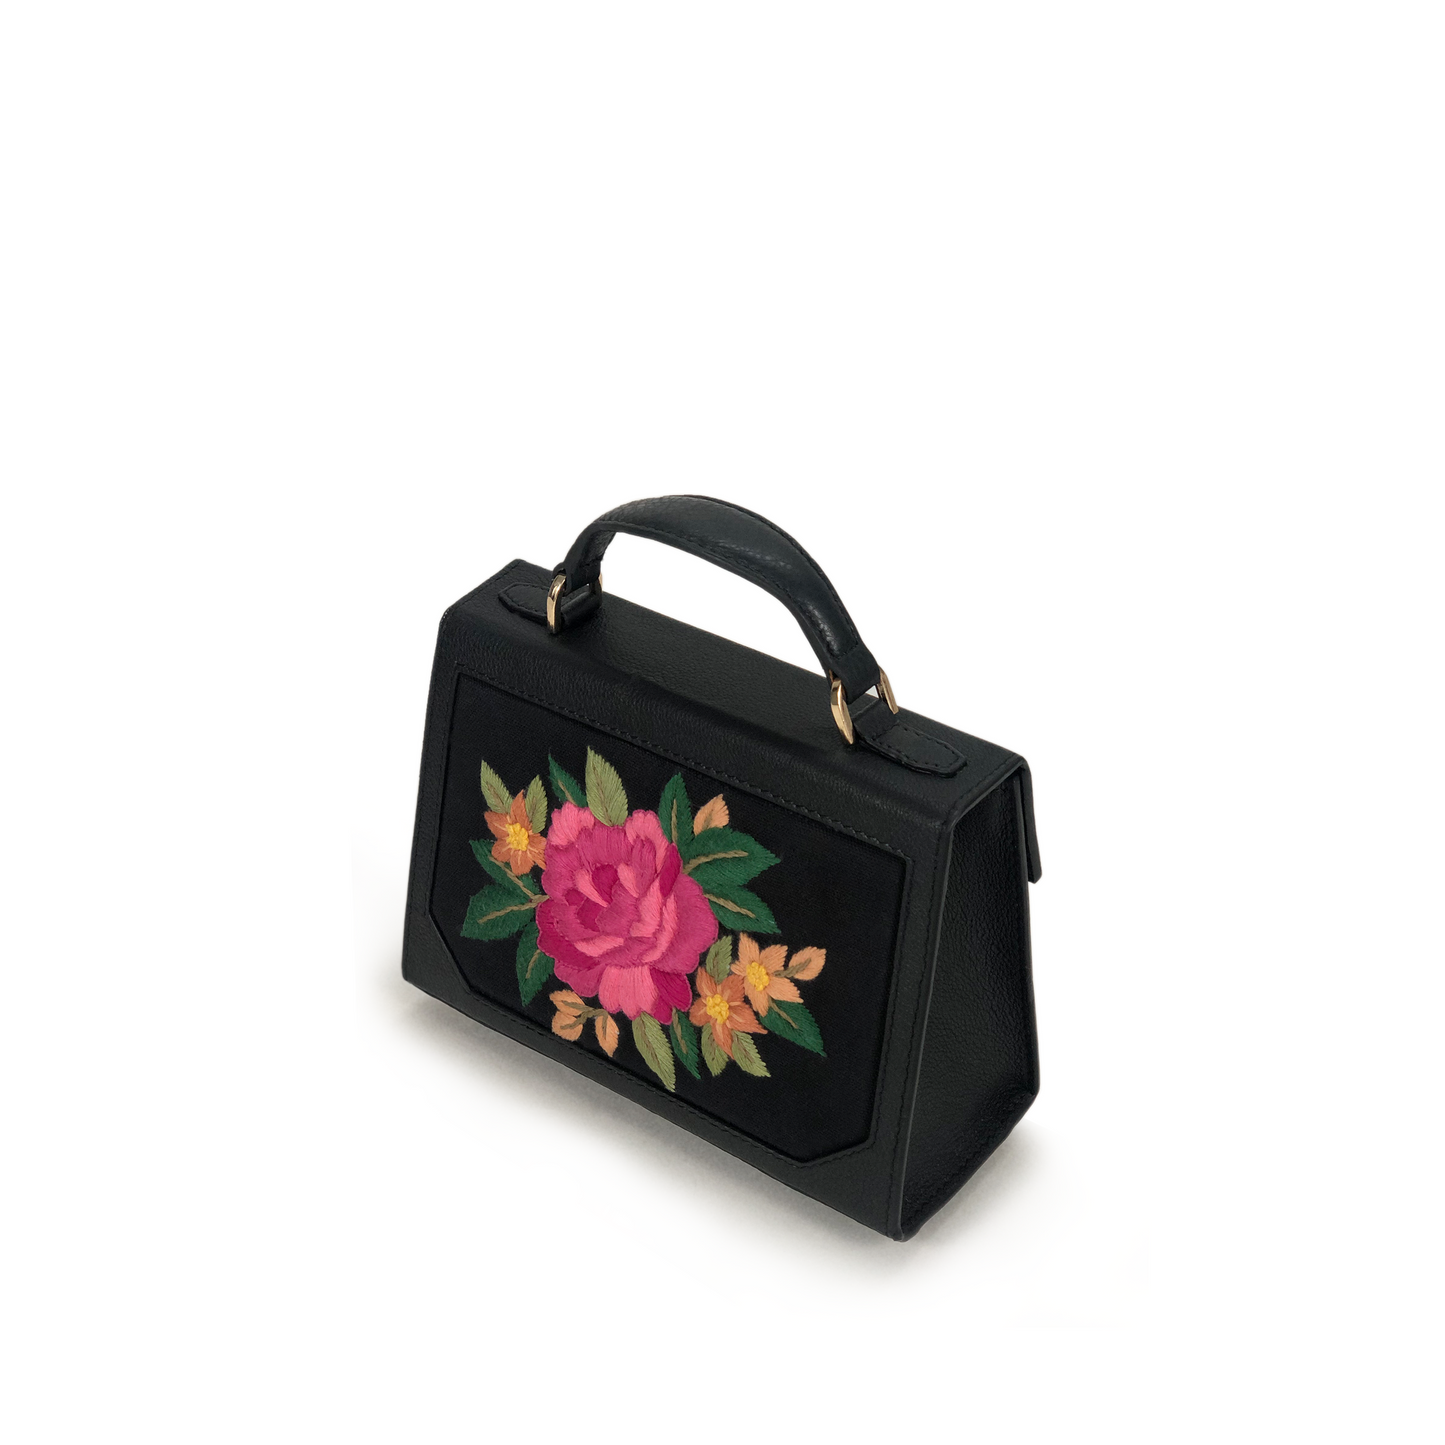 New Iris mini embroidered handbag